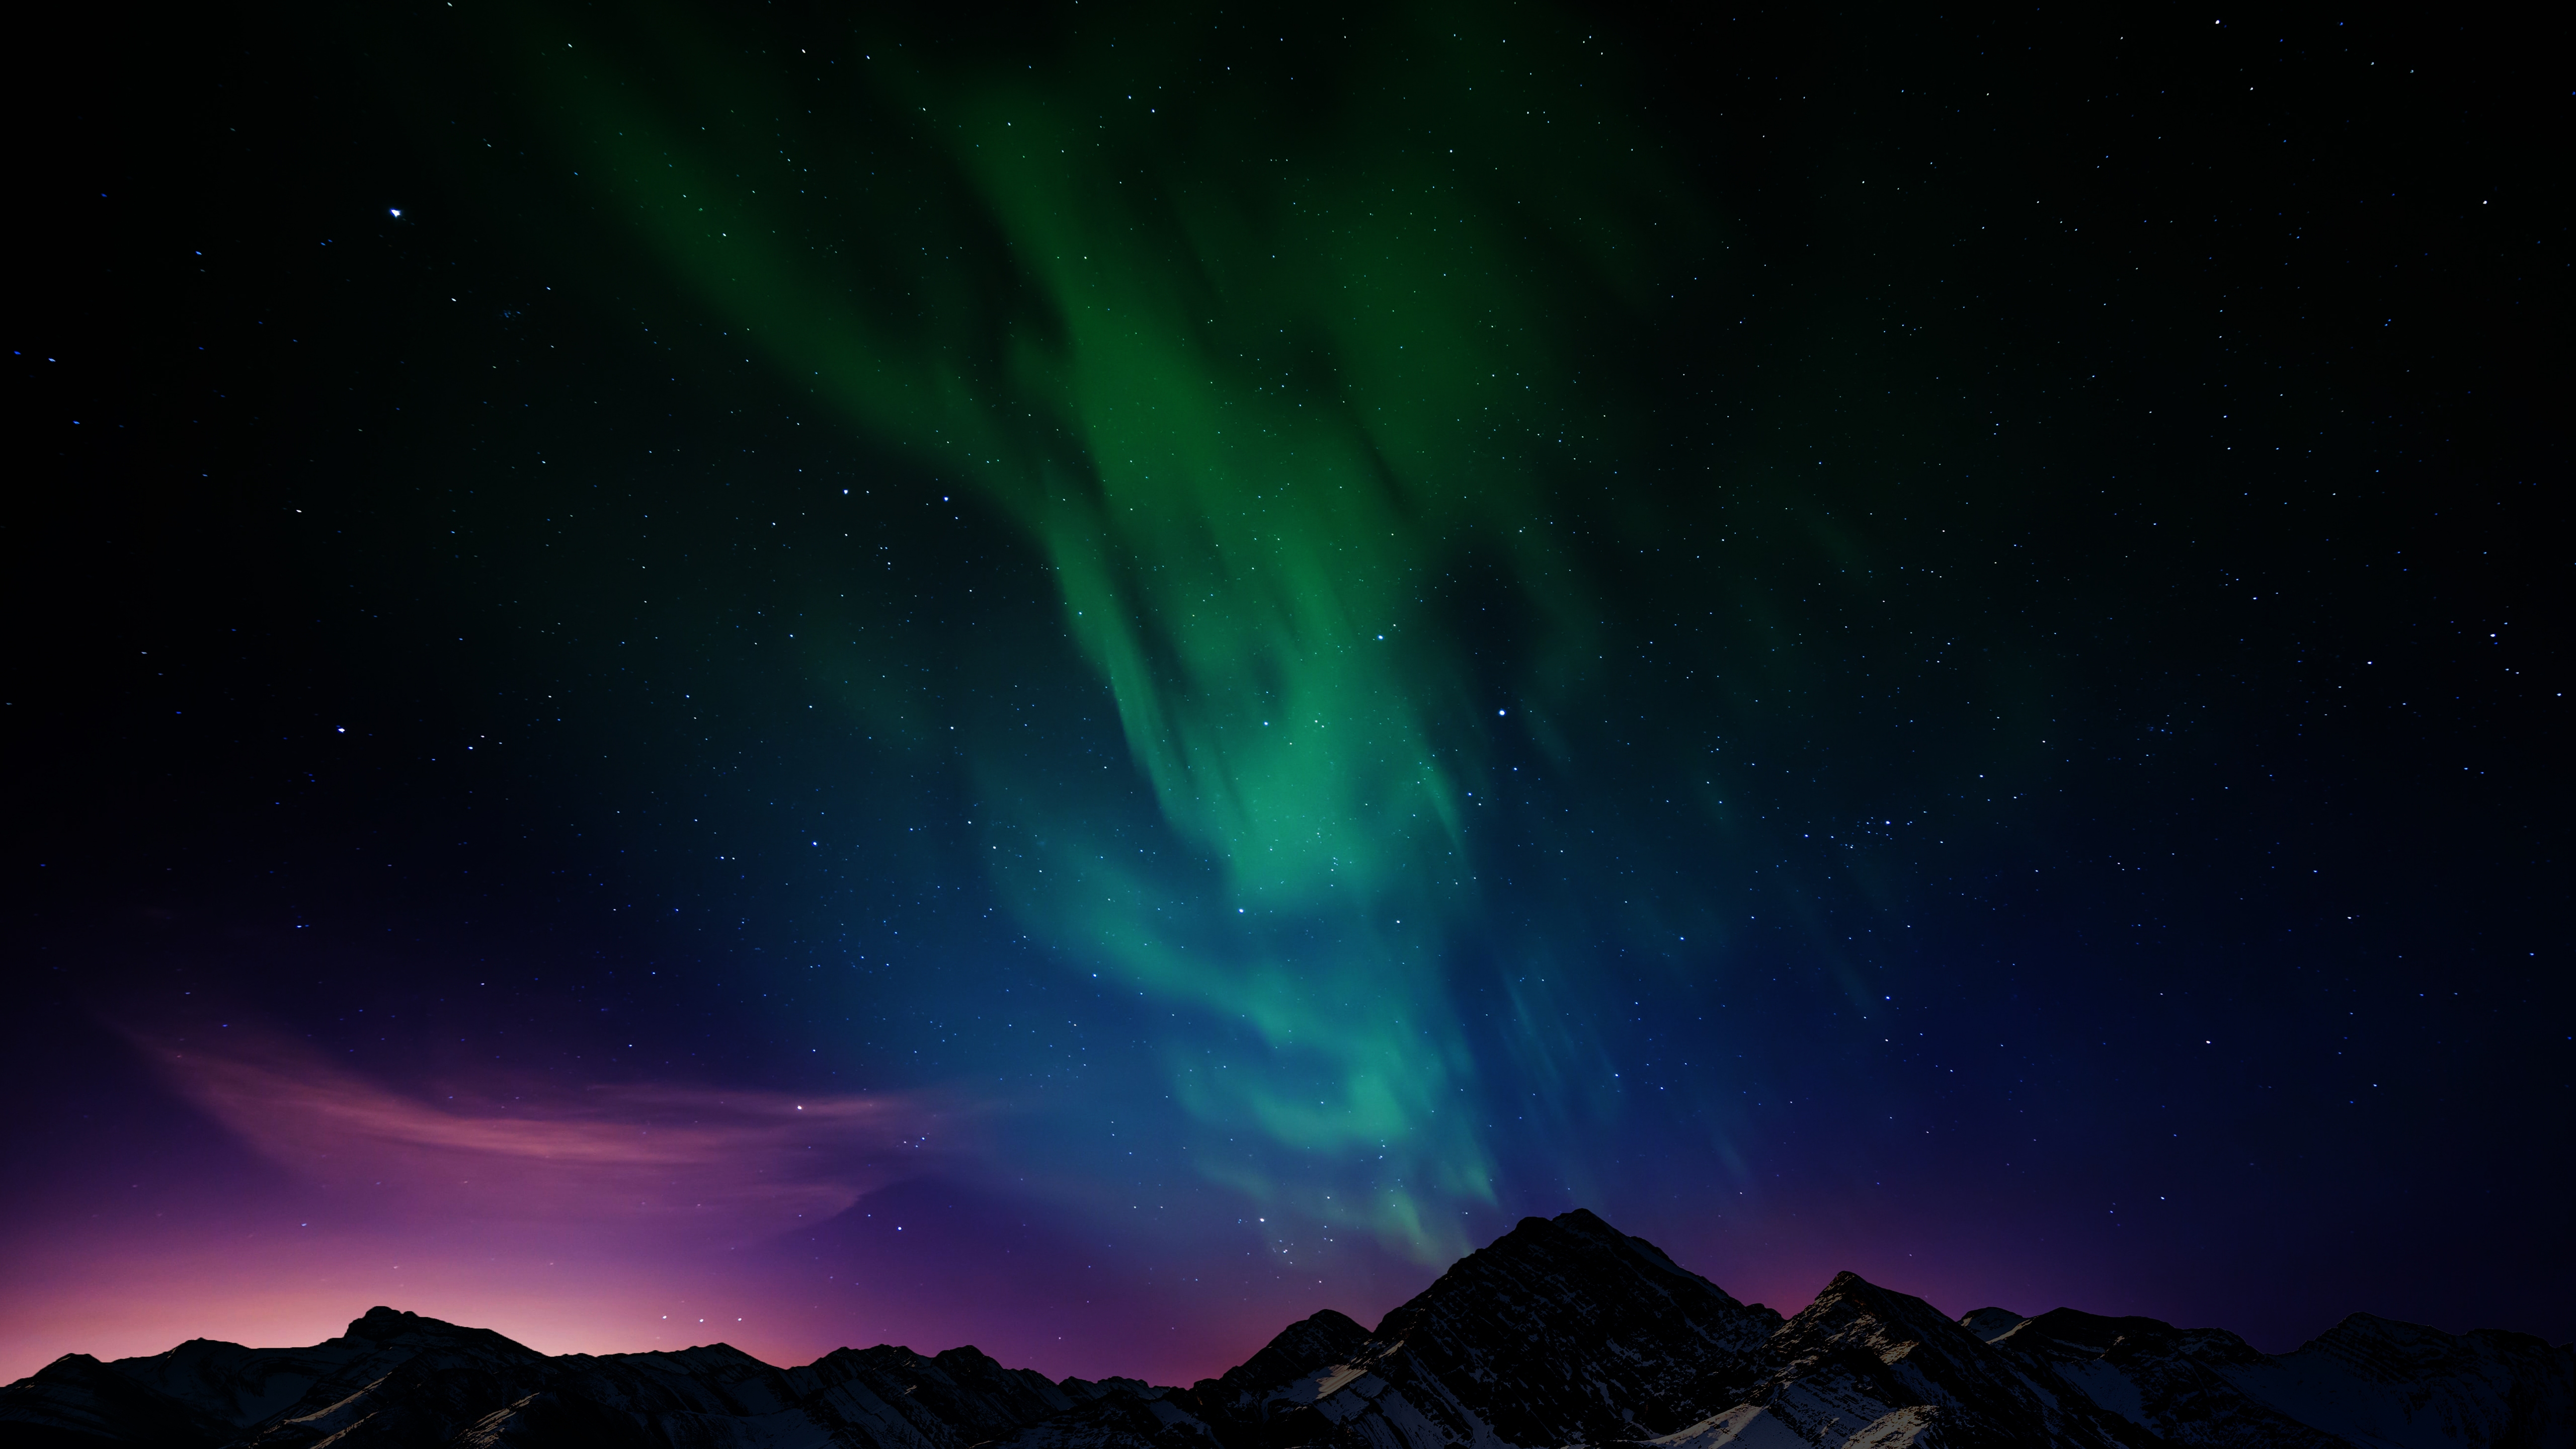 HD wallpaper, Aurora Borealis, Northern Lights, Mountain Range, Landscape, 5K, Starry Sky, Scenic, Night Time